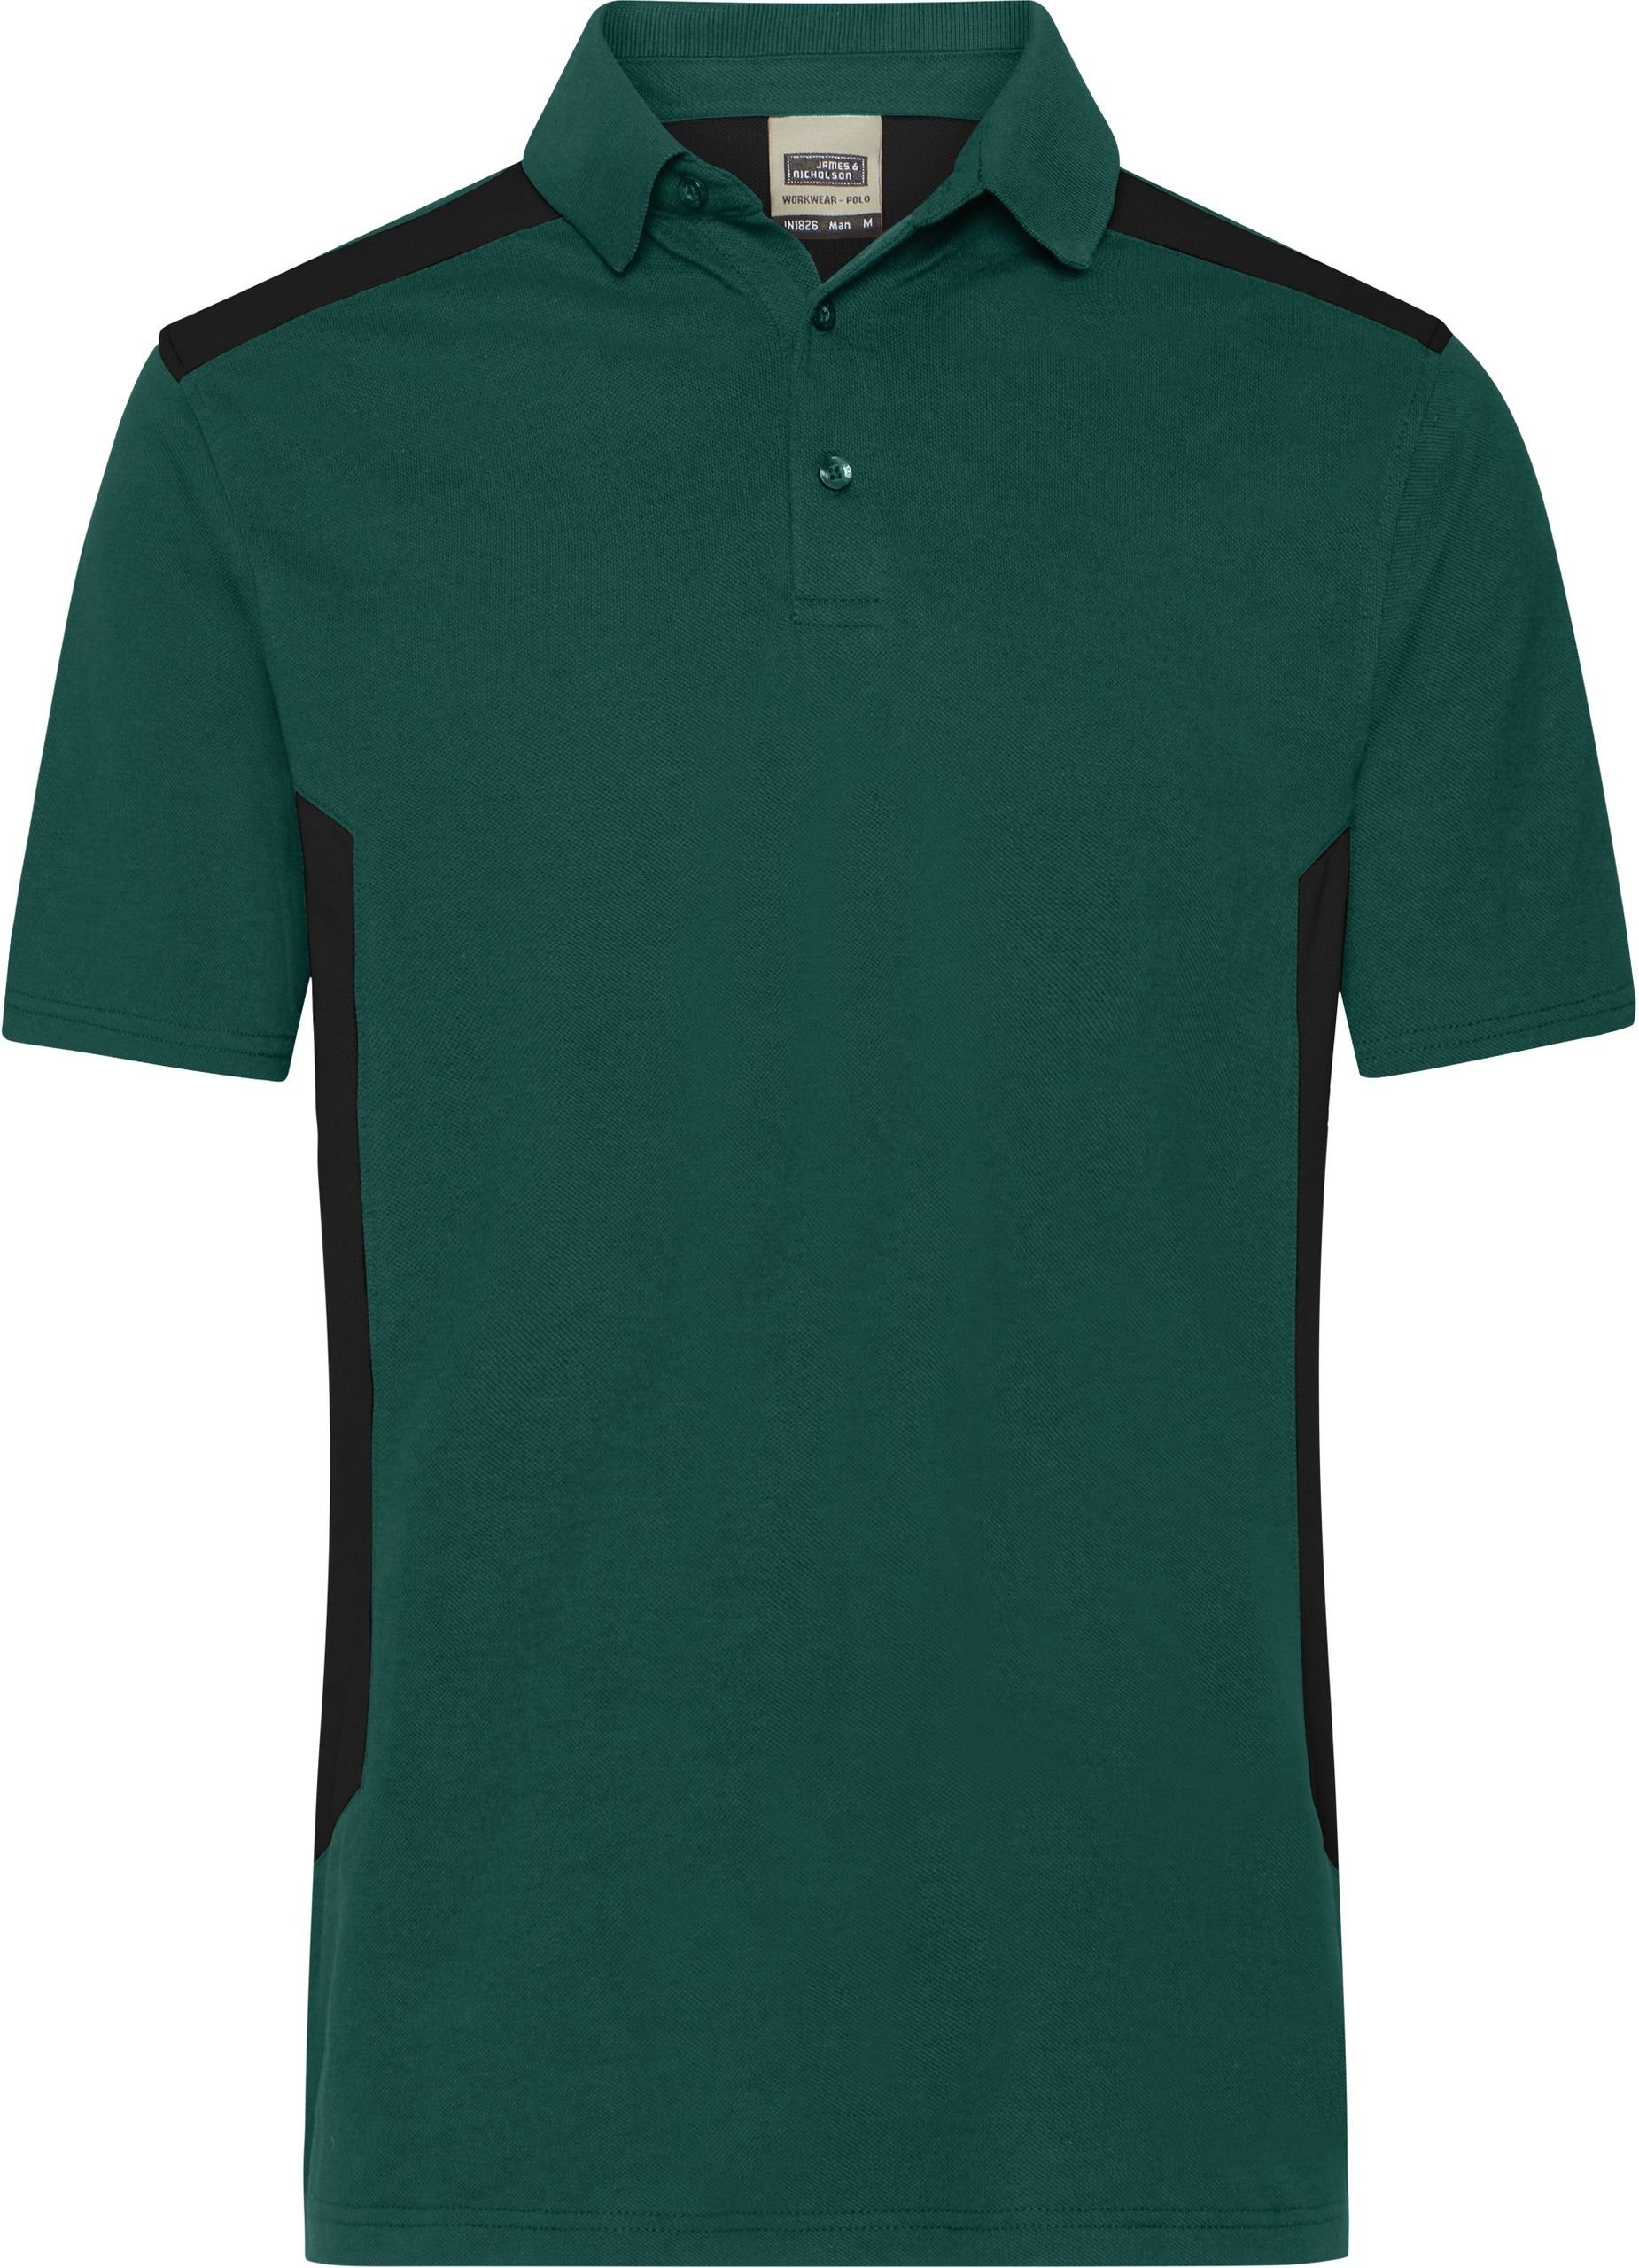 & Workwear green/black Herren Strong Poloshirt - Nicholson James dark Polo